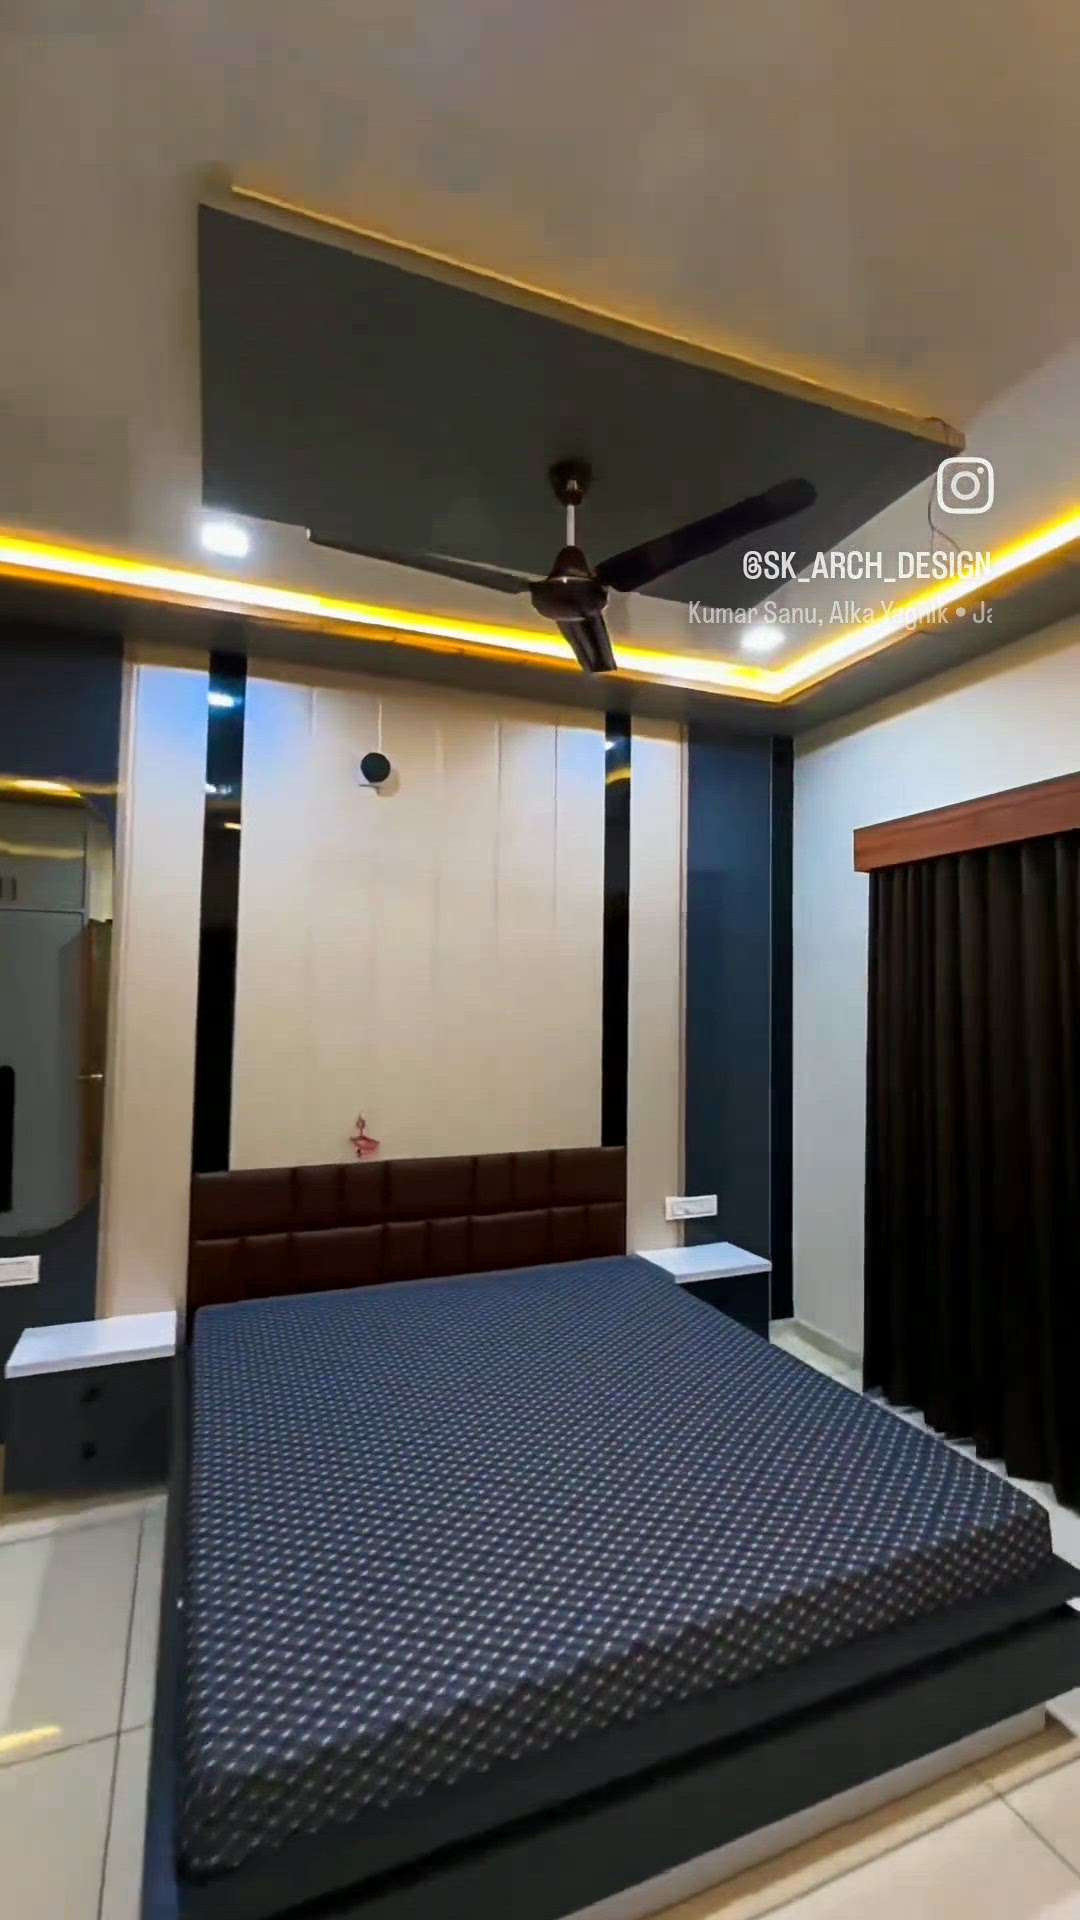 Bedroom interior design By Sk Arch Design More Details contact Sk Arch Design Jaipur
mob -8000810298
.
.
.
#InteriorDesigner #Architect #architecturedesigns #exteriordesigns #houseplanning #CivilContractor #jaipurarchitect #treditional #LivingroomDesigns #villaconstrction #exterior #Architectural&Interior #housedesigns🏡🏡 #ElevationHome #HouseRenovation #housedecoration
.
.
.
Instagram link:- https://www.instagram.com/diamond_architectural_studio?r=nametag
WhatsApp link:- https://wa.me/message/ZNMVUL3RAHHDB1
Facebook link:- https://www.facebook.com/Diamond-Architectural-105349291786371/
Twitter link:- https://twitter.com/diamondarchite6?t=sCGeBDY0_98JpT7UIicaMA&s=09